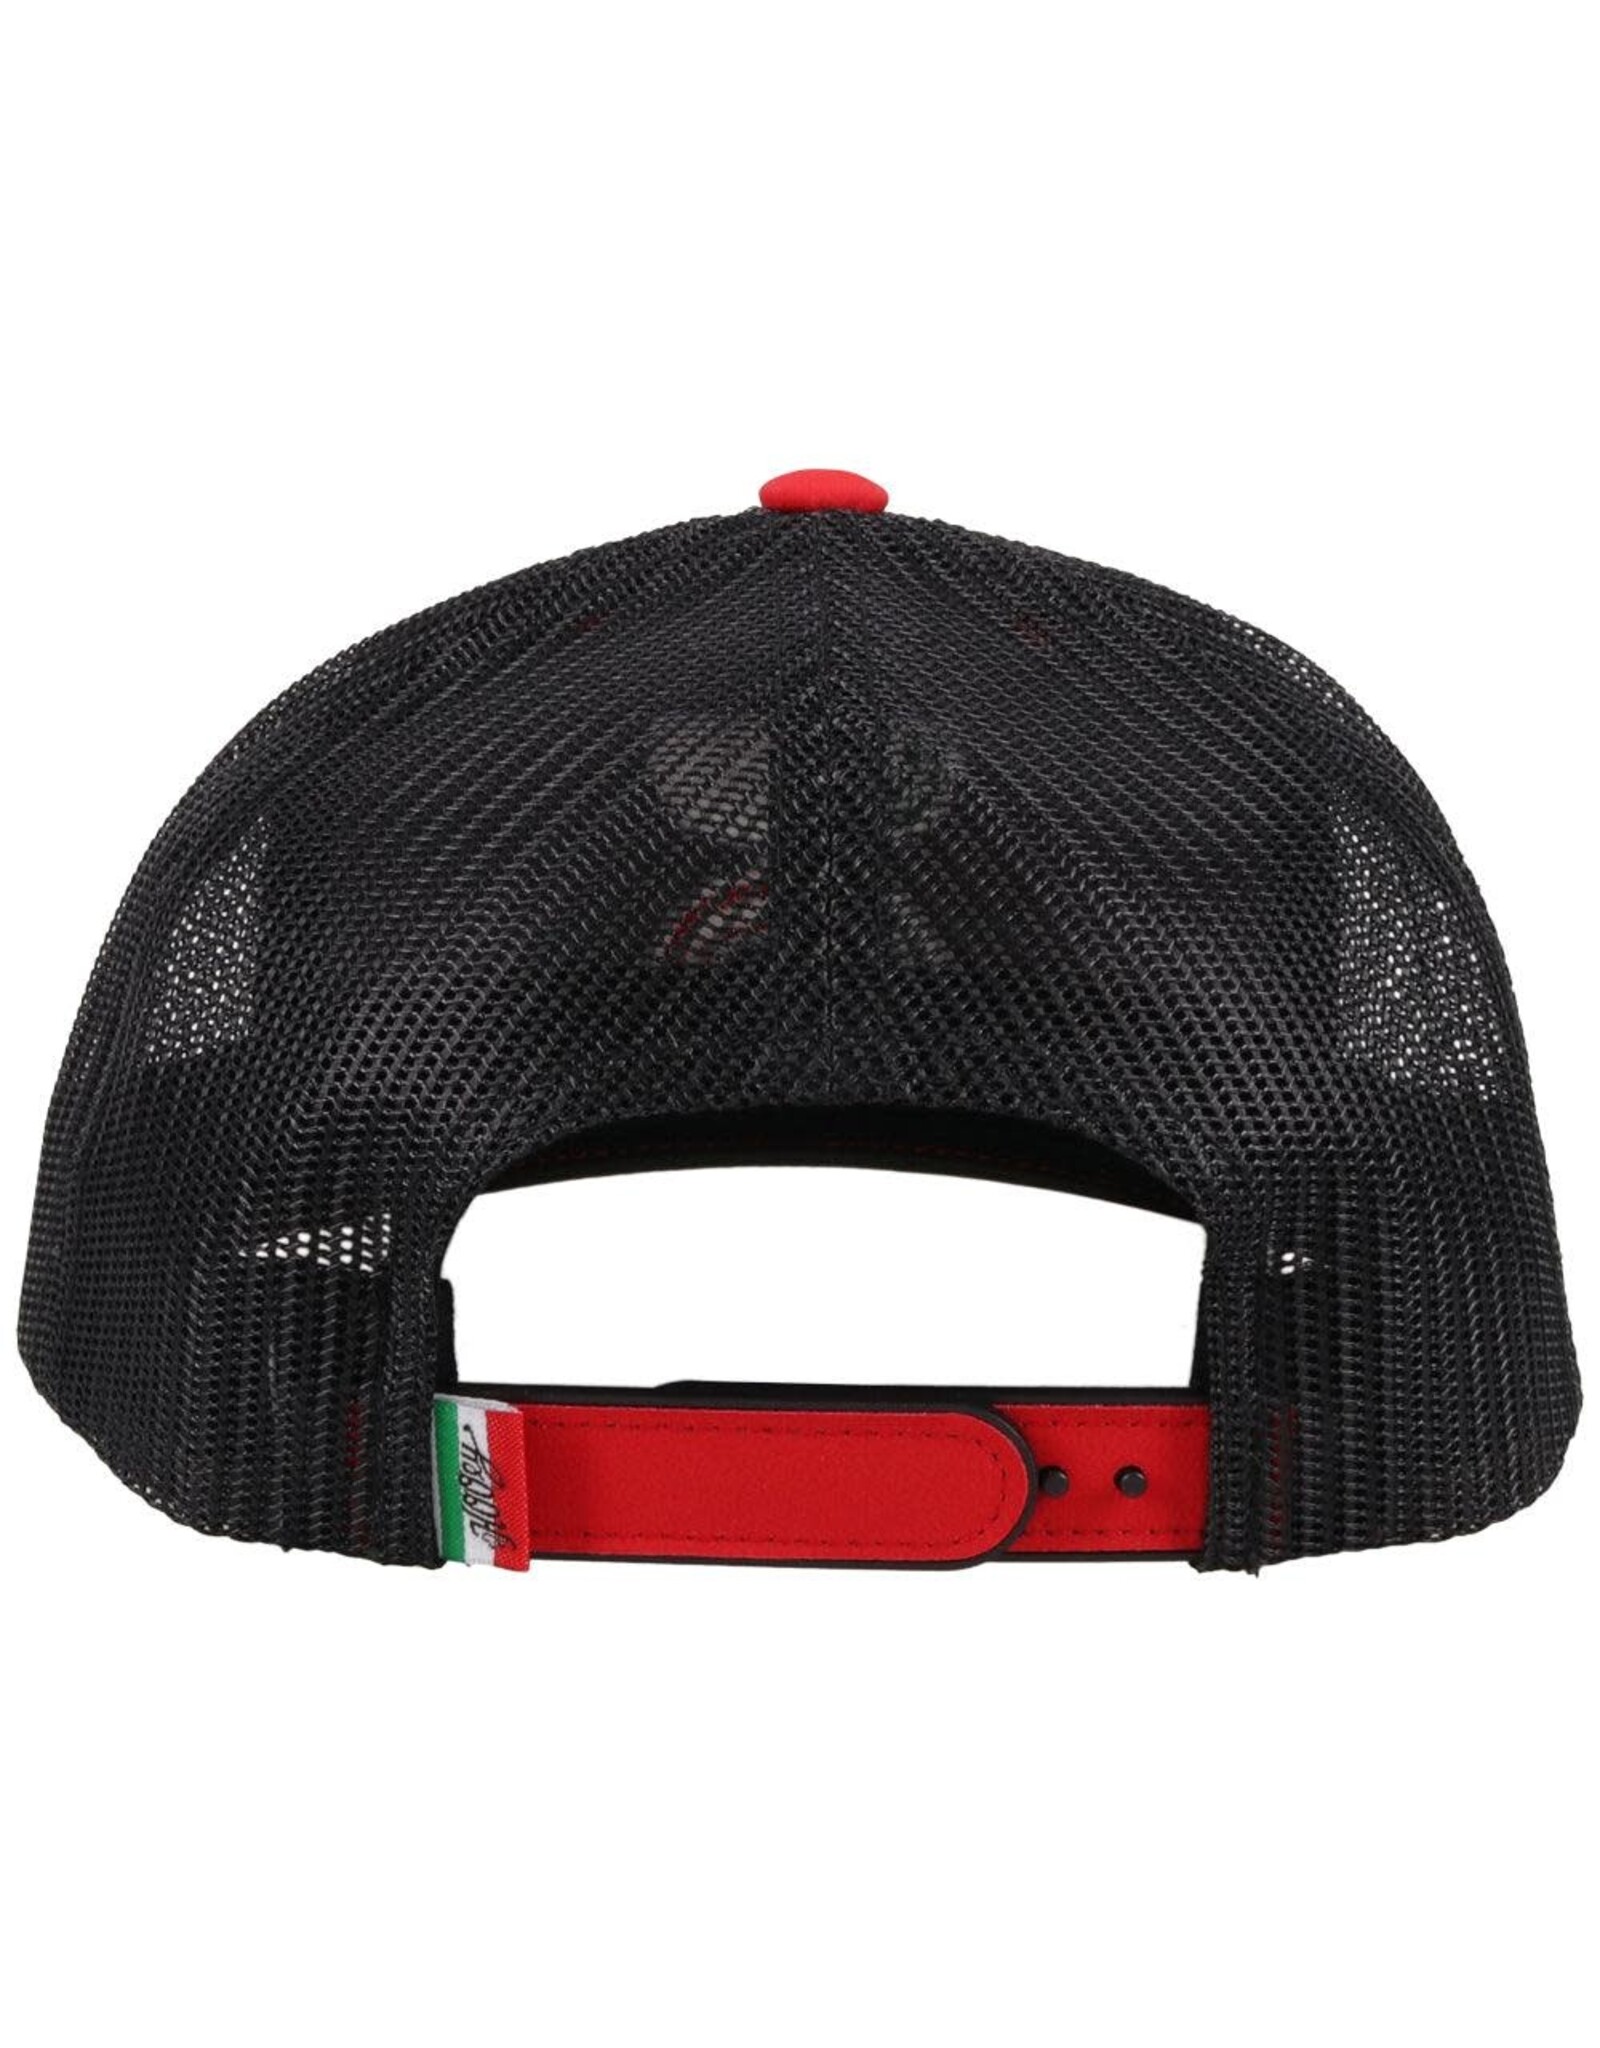 Hooey Brands Hat "Boquillas" Red/Black